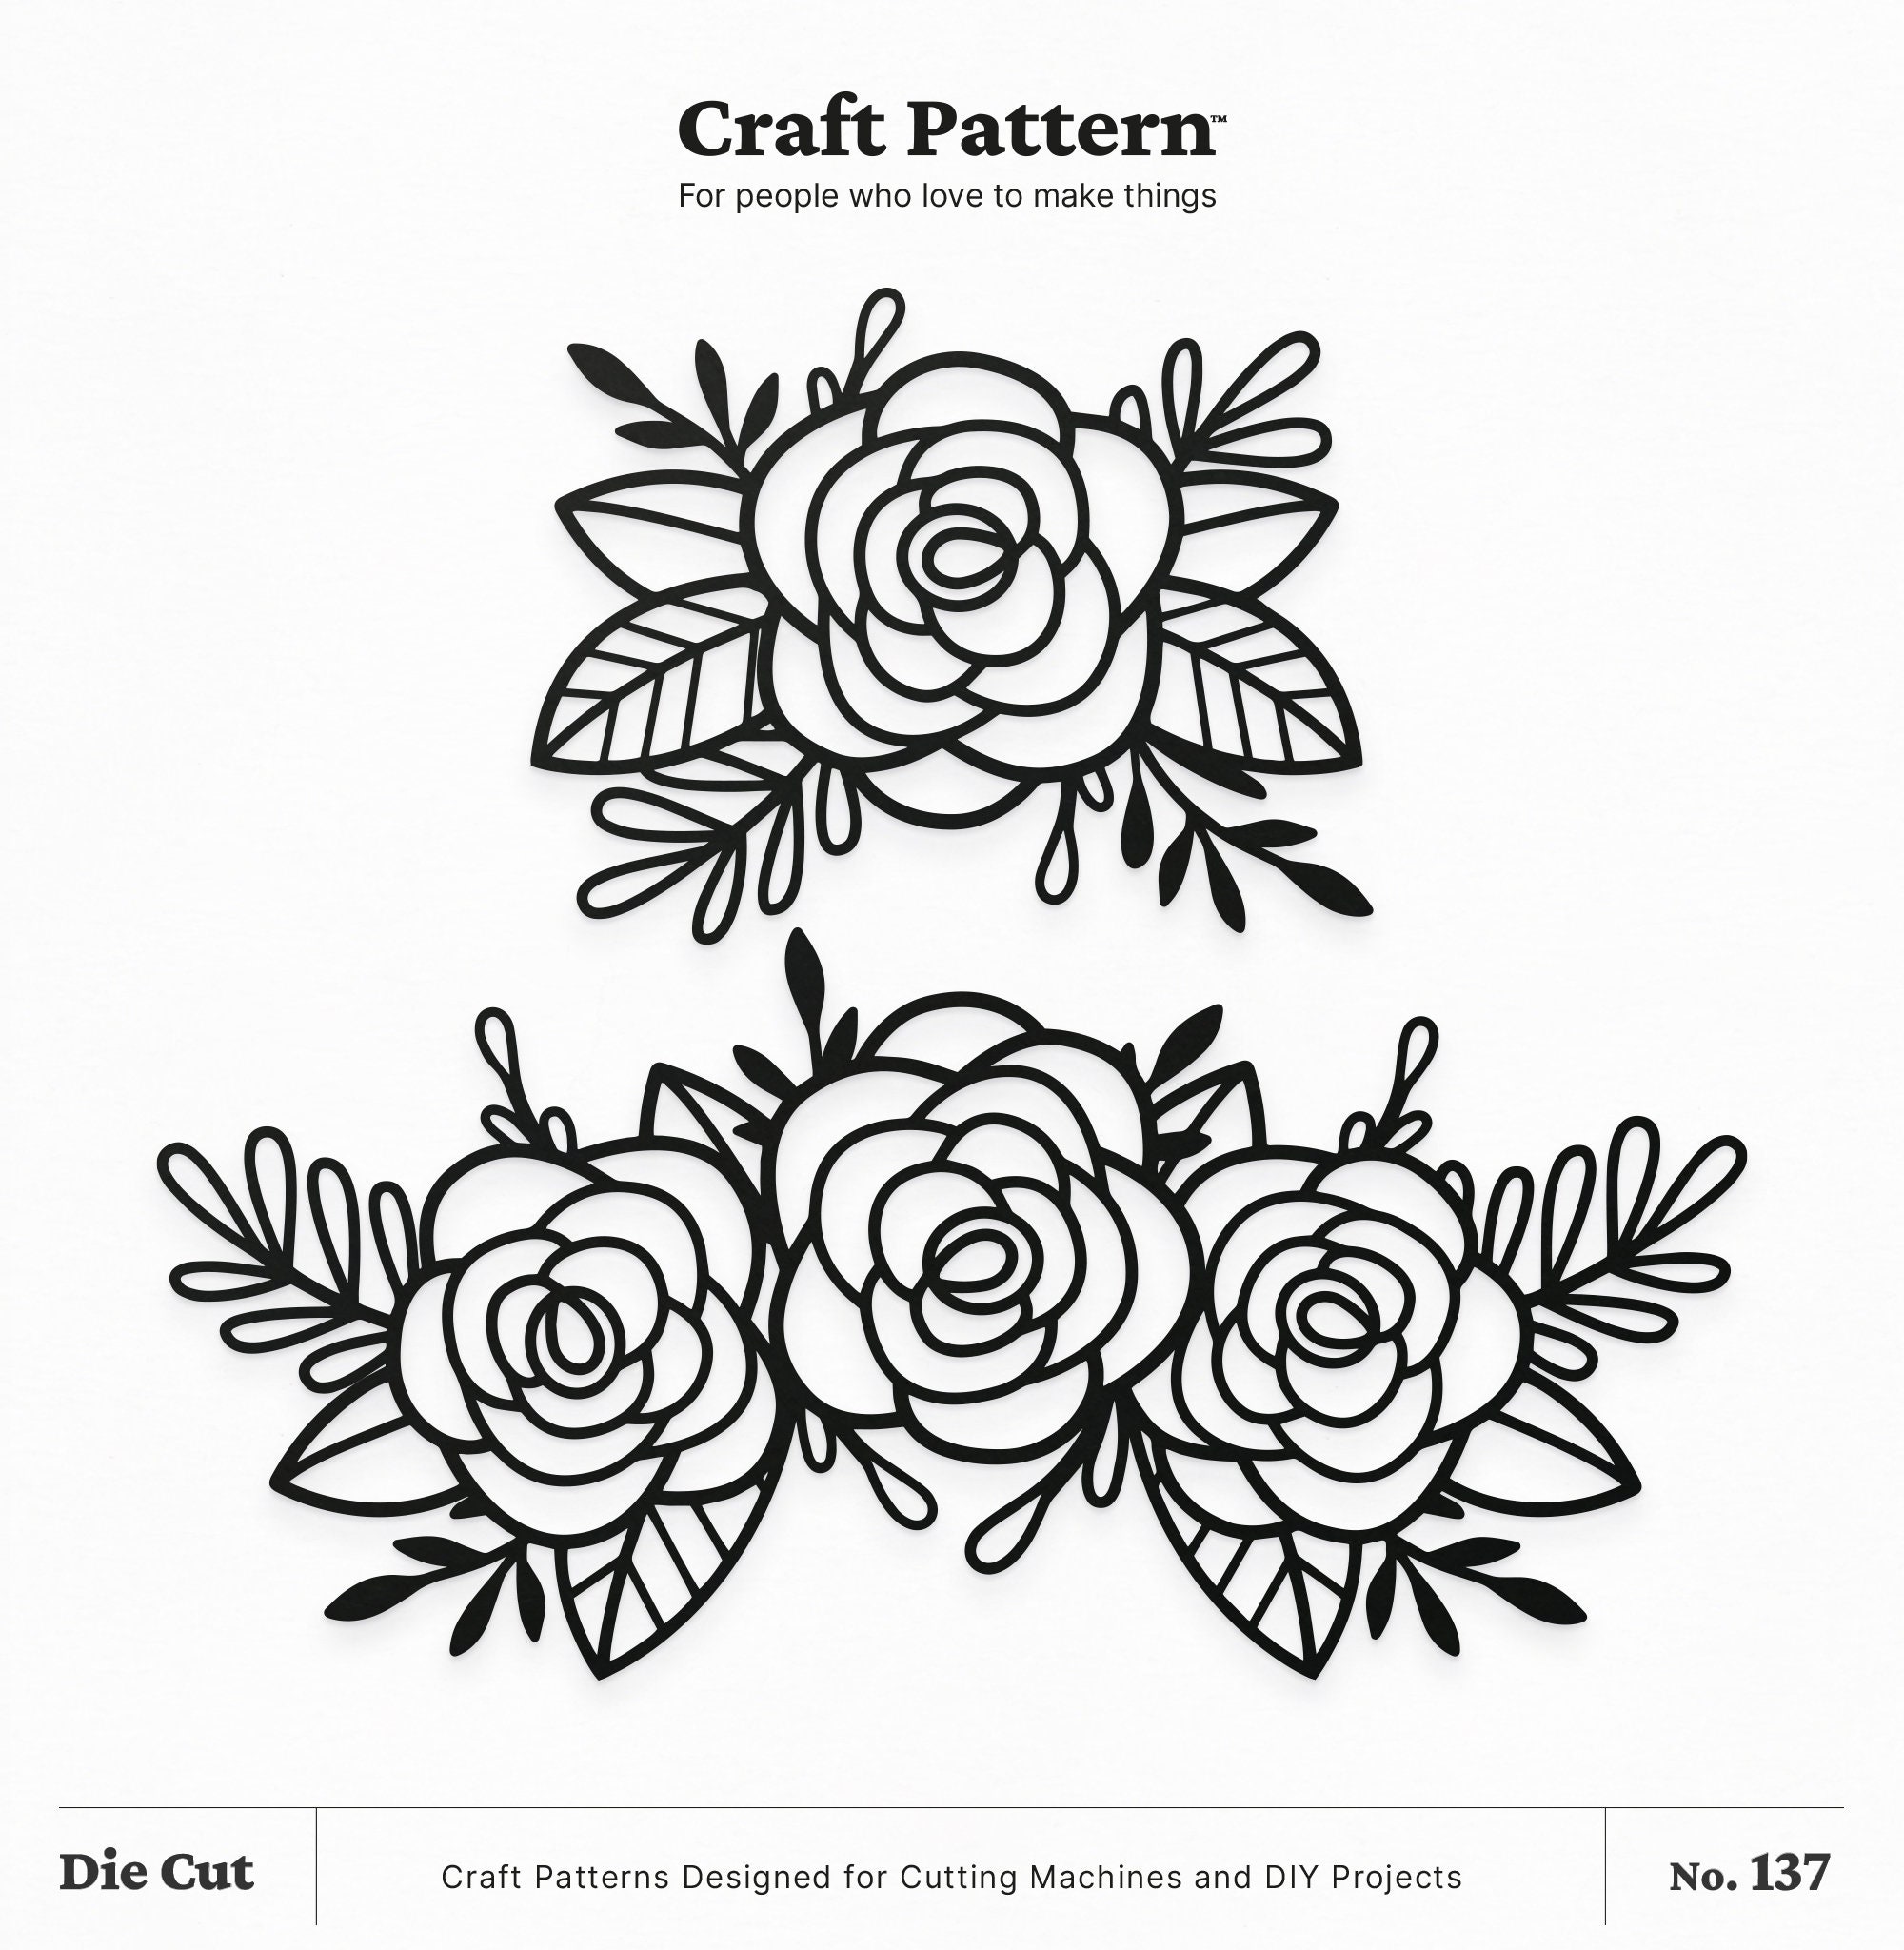 Free Rose Monogram SVG  FB80 - Craft House SVG